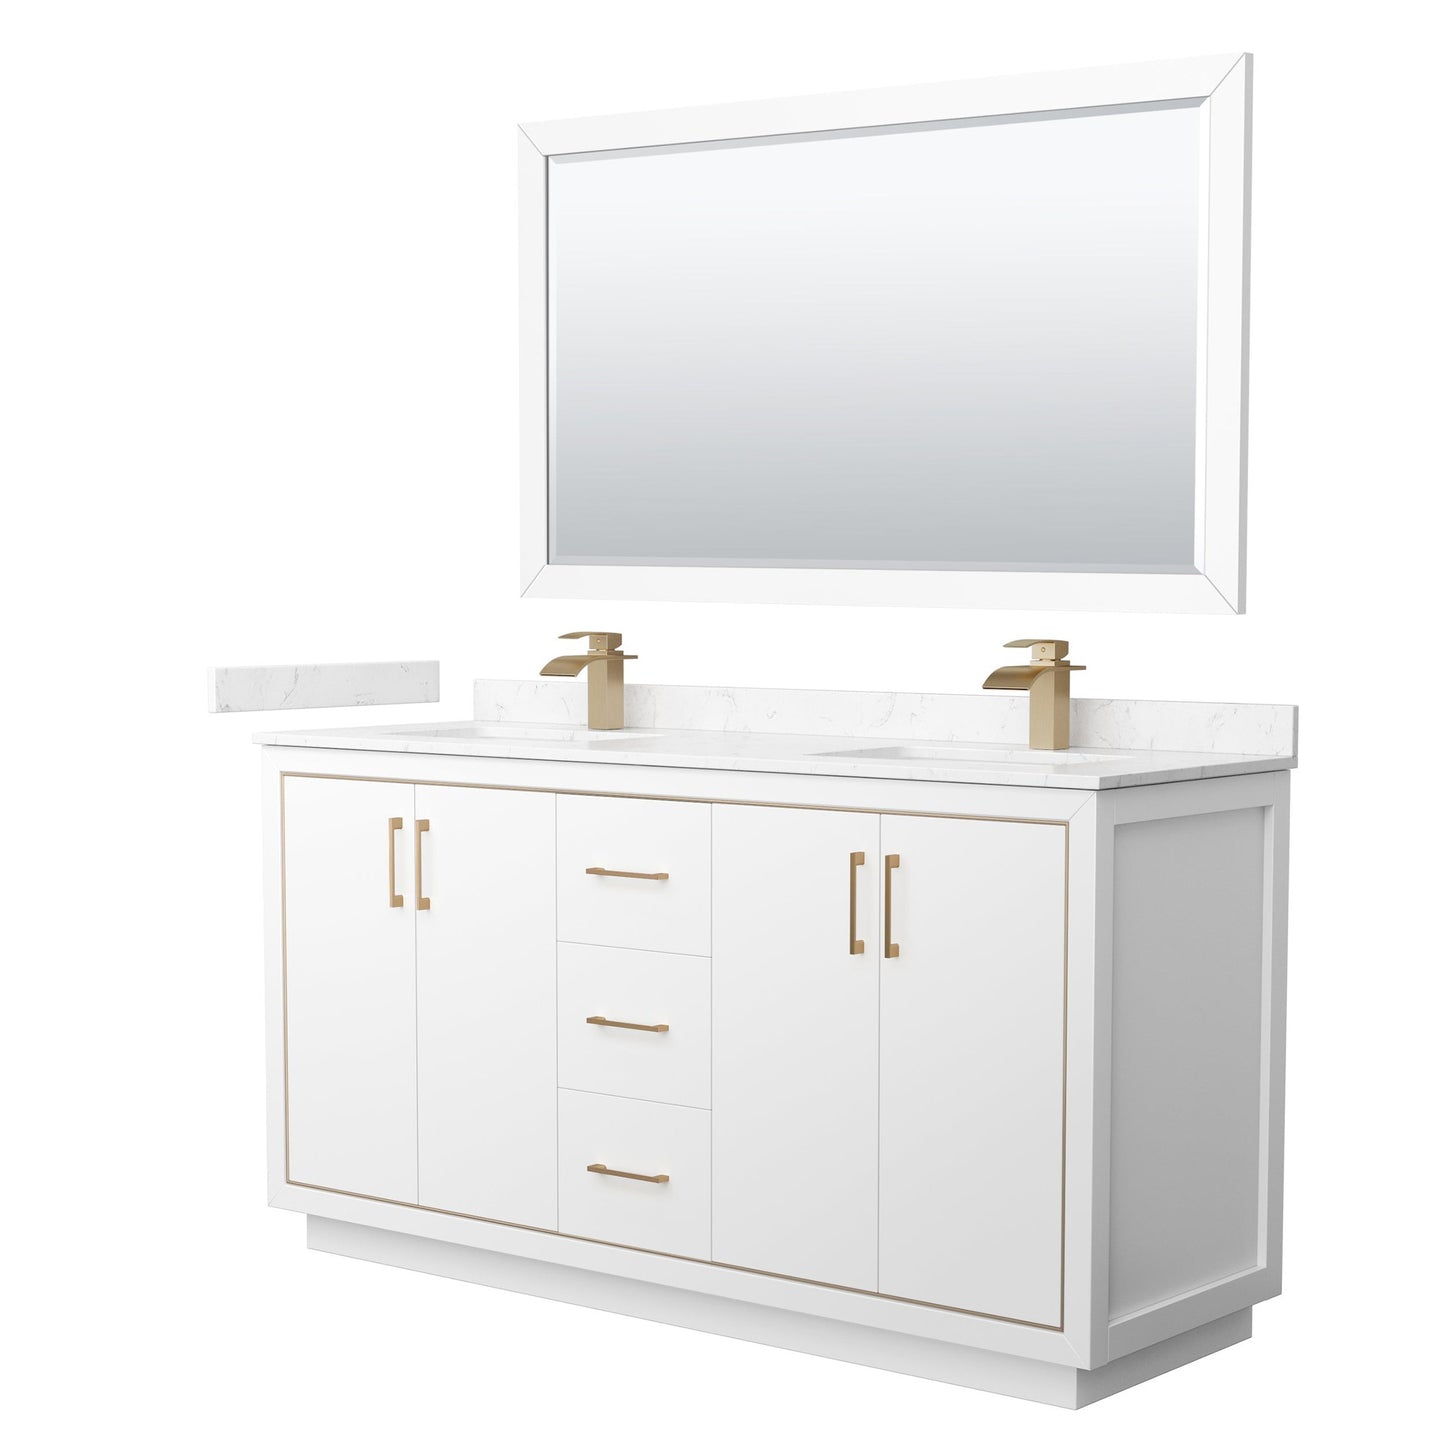 Wyndham Collection Icon 66" Double Bathroom Vanity in White, Carrara Cultured Marble Countertop, Undermount Square Sinks, Satin Bronze Trim, 58" Mirror